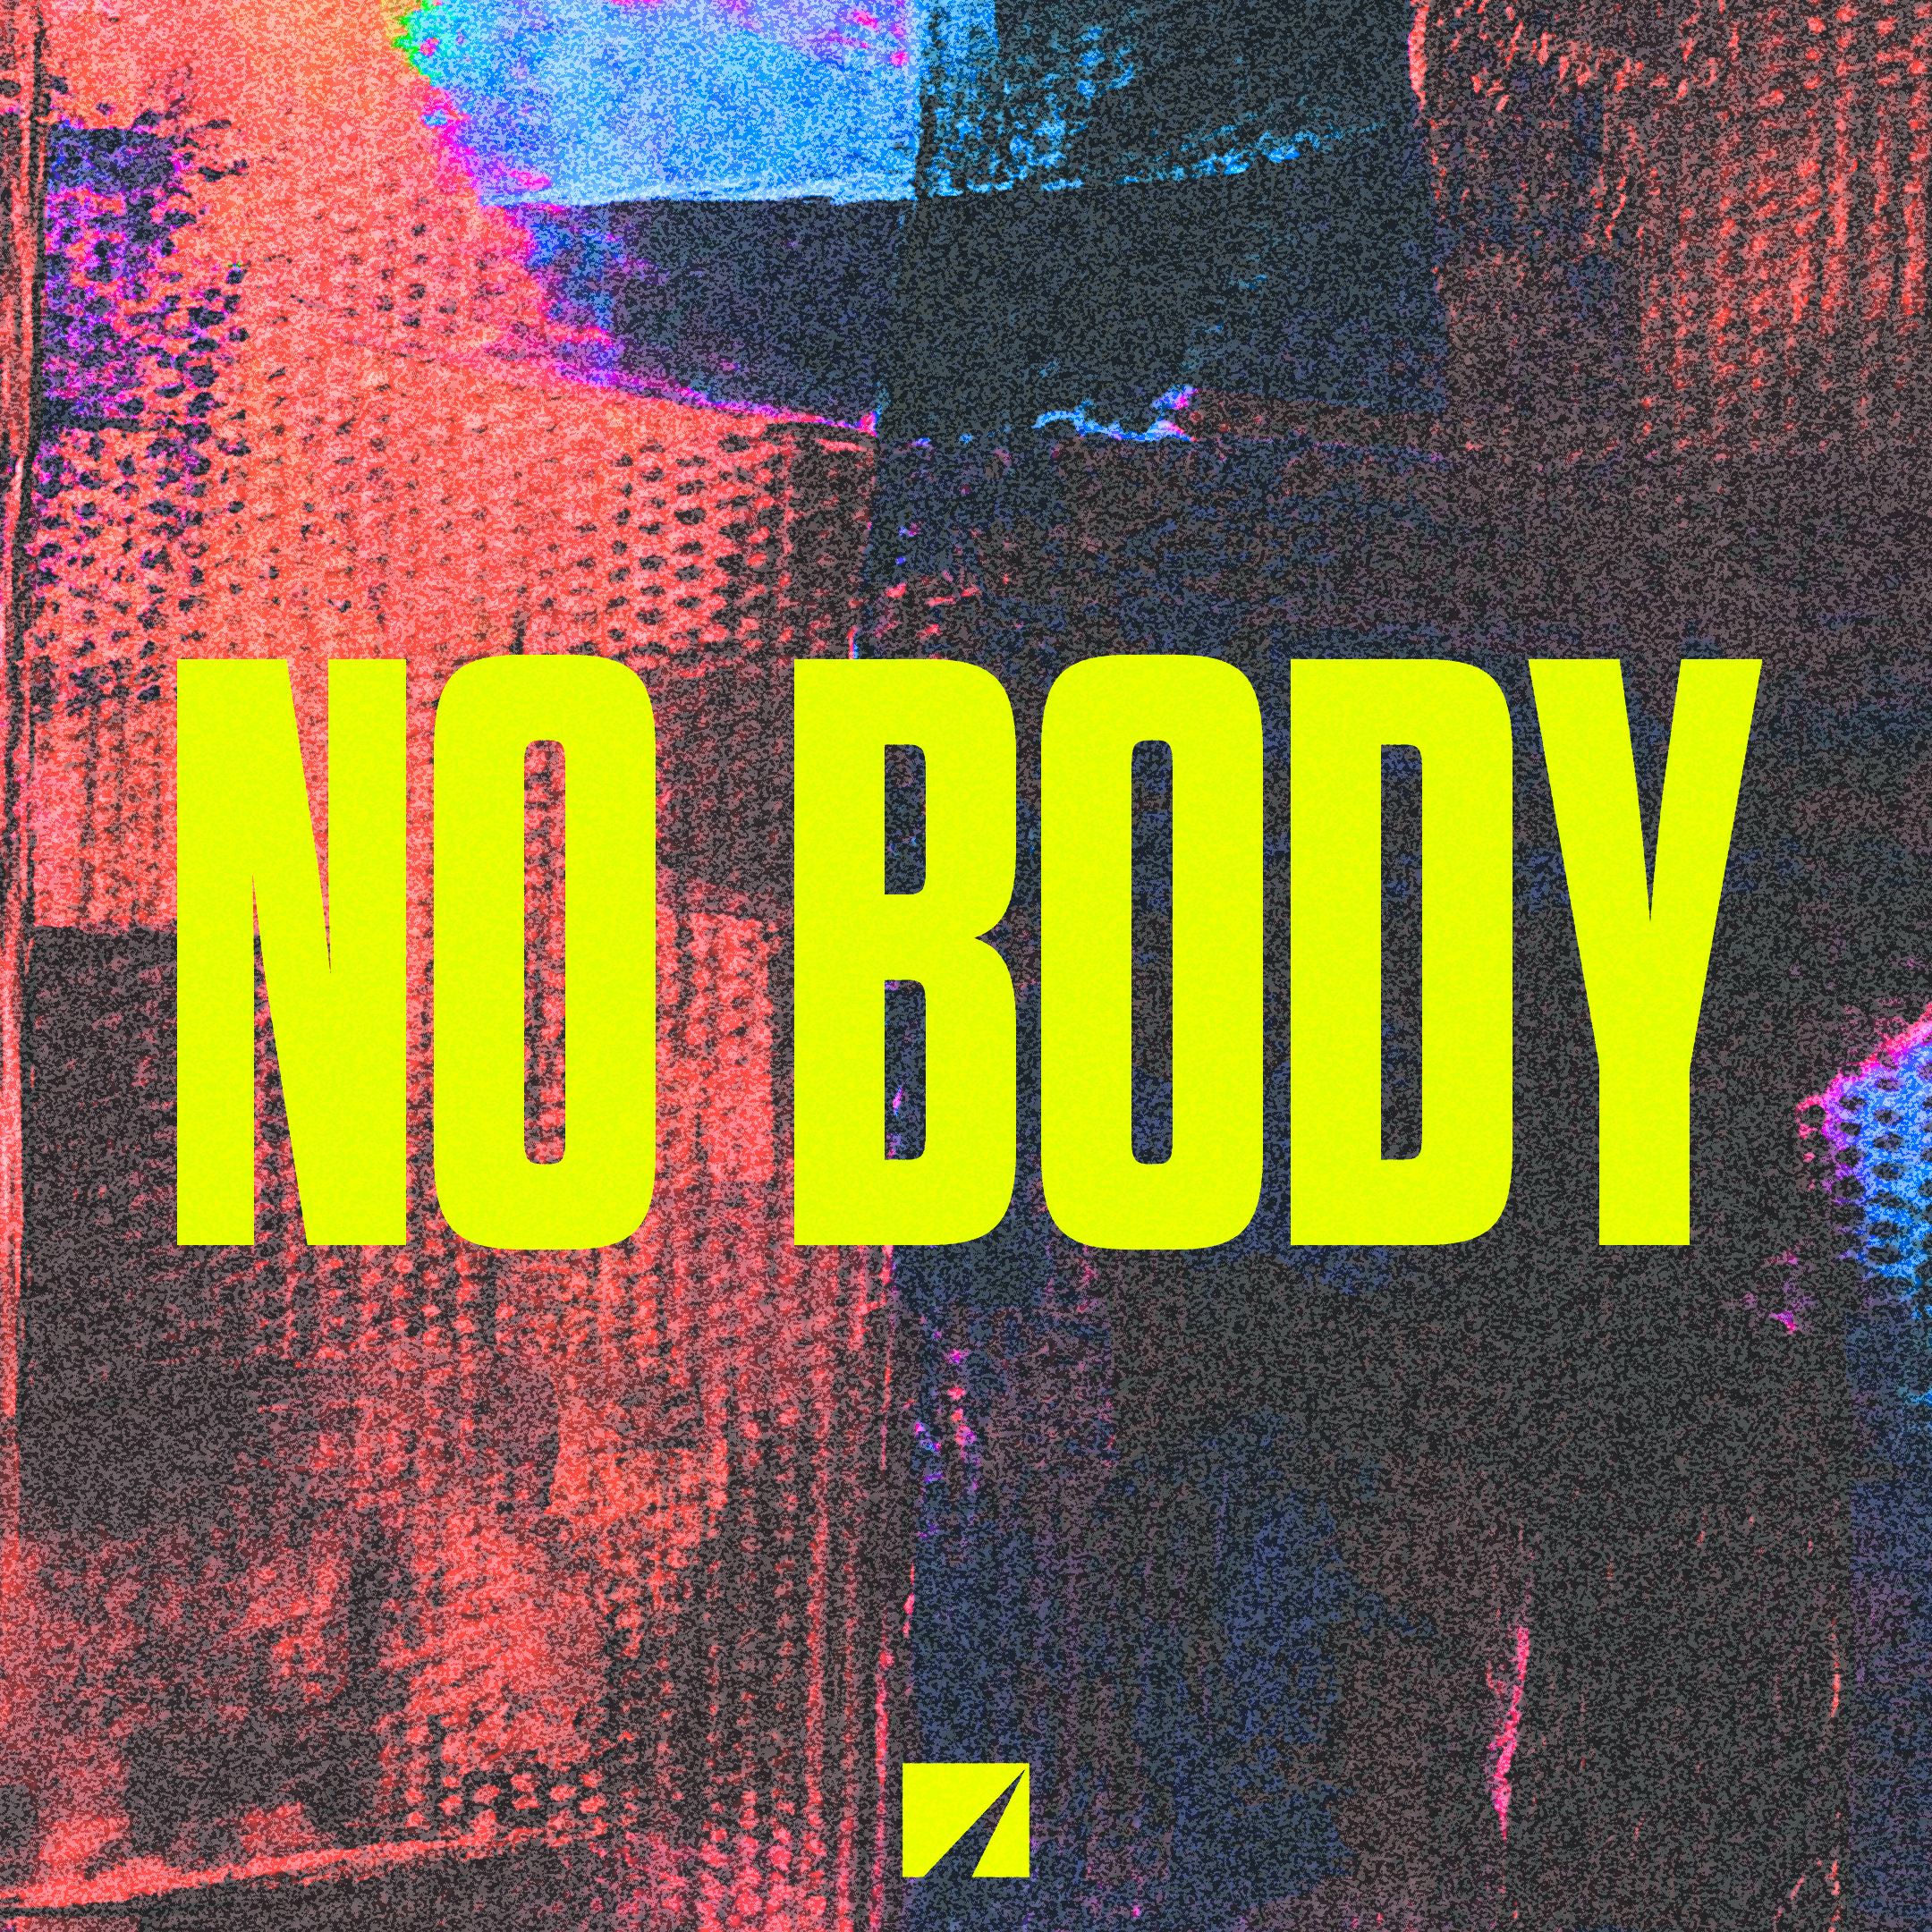 No Body